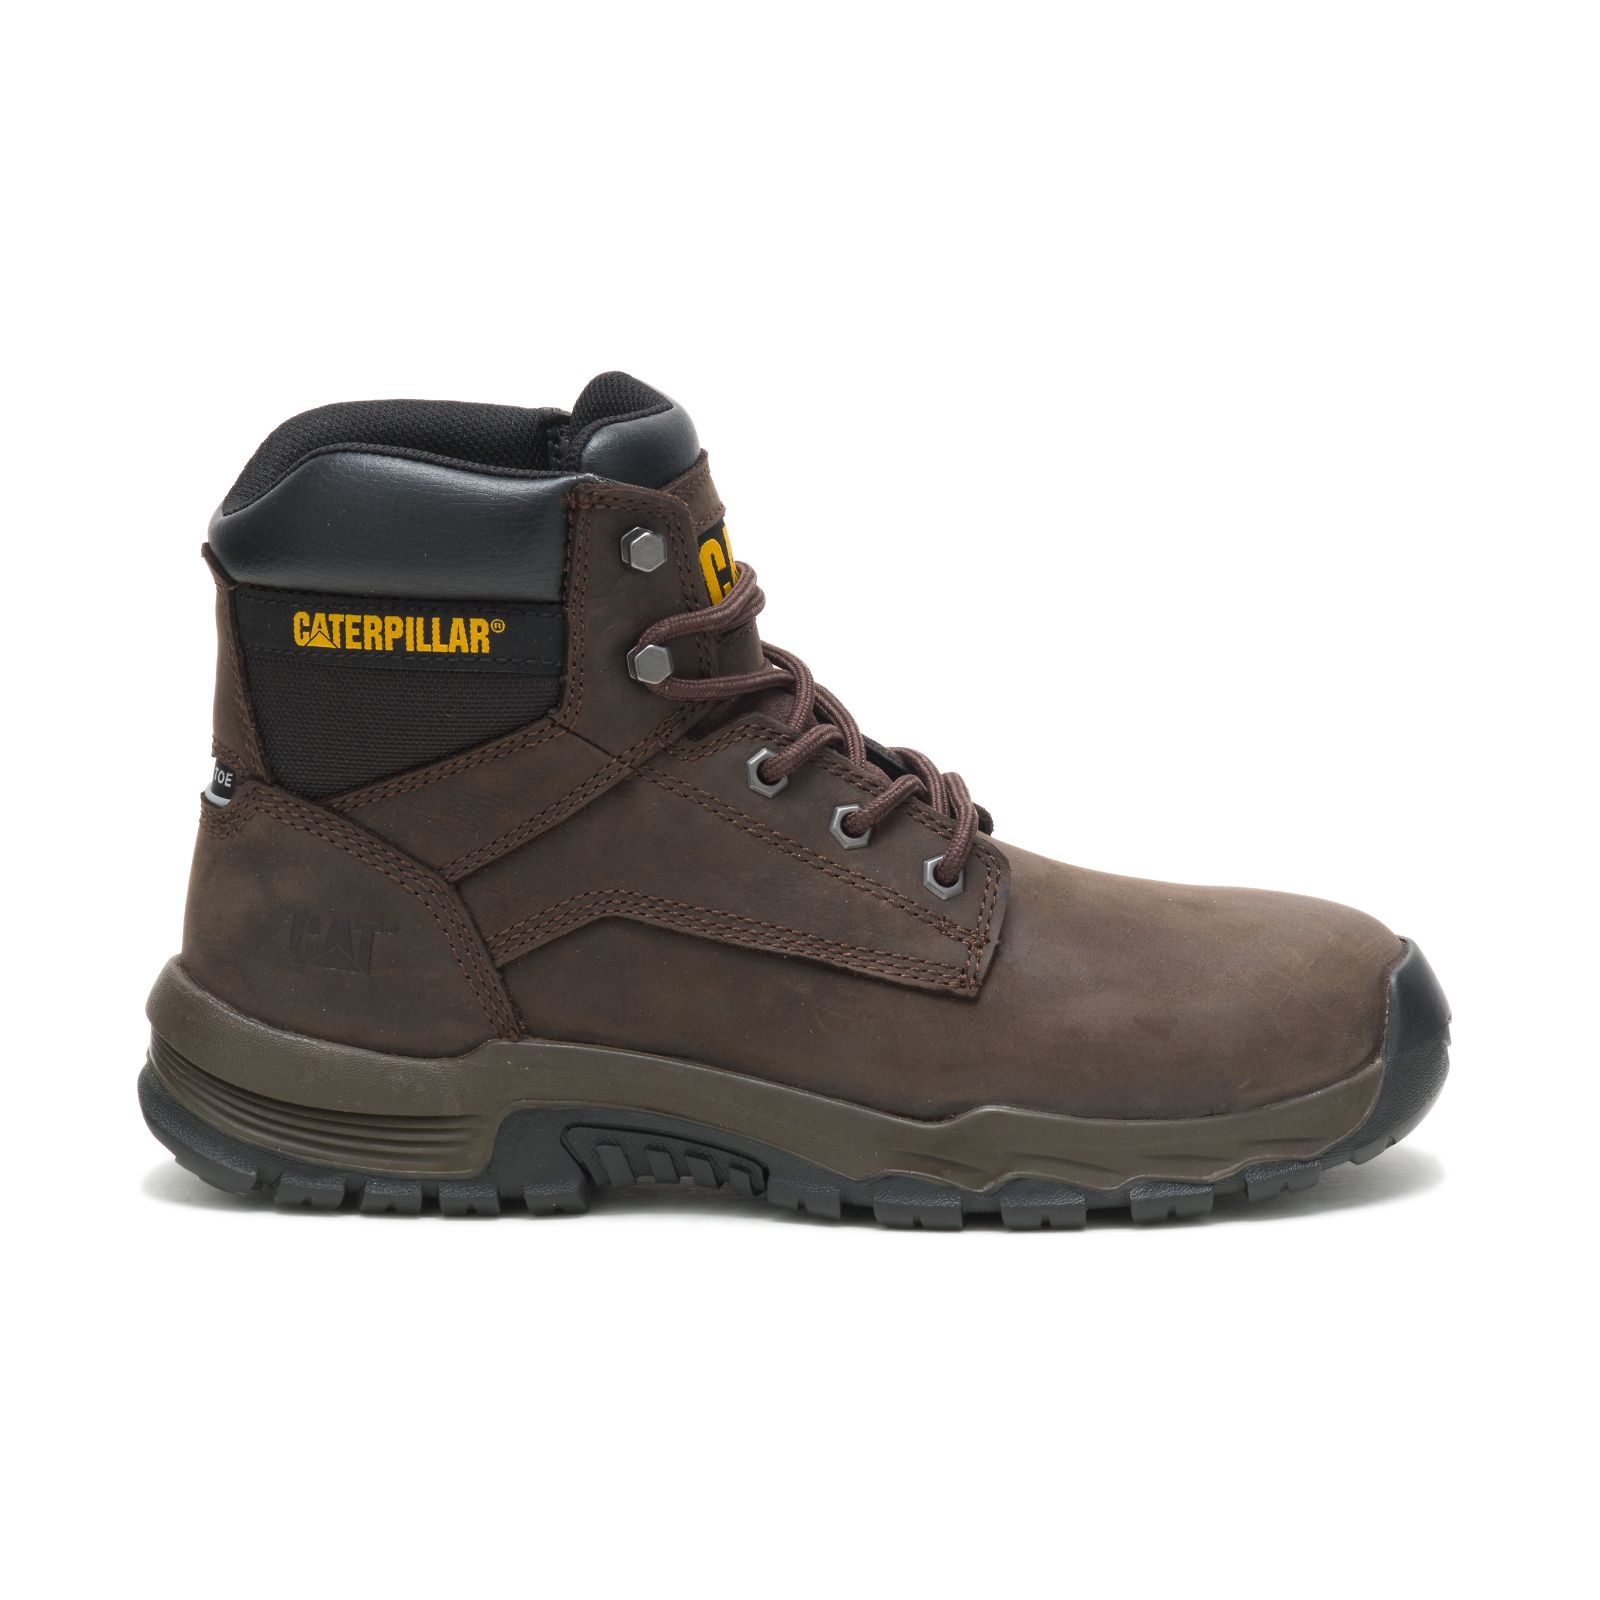 Caterpillar Steel Toe Boots UAE Online - Caterpillar Upholder Waterproof Steel Toe Mens - Dark Chocolate MUTIHX437